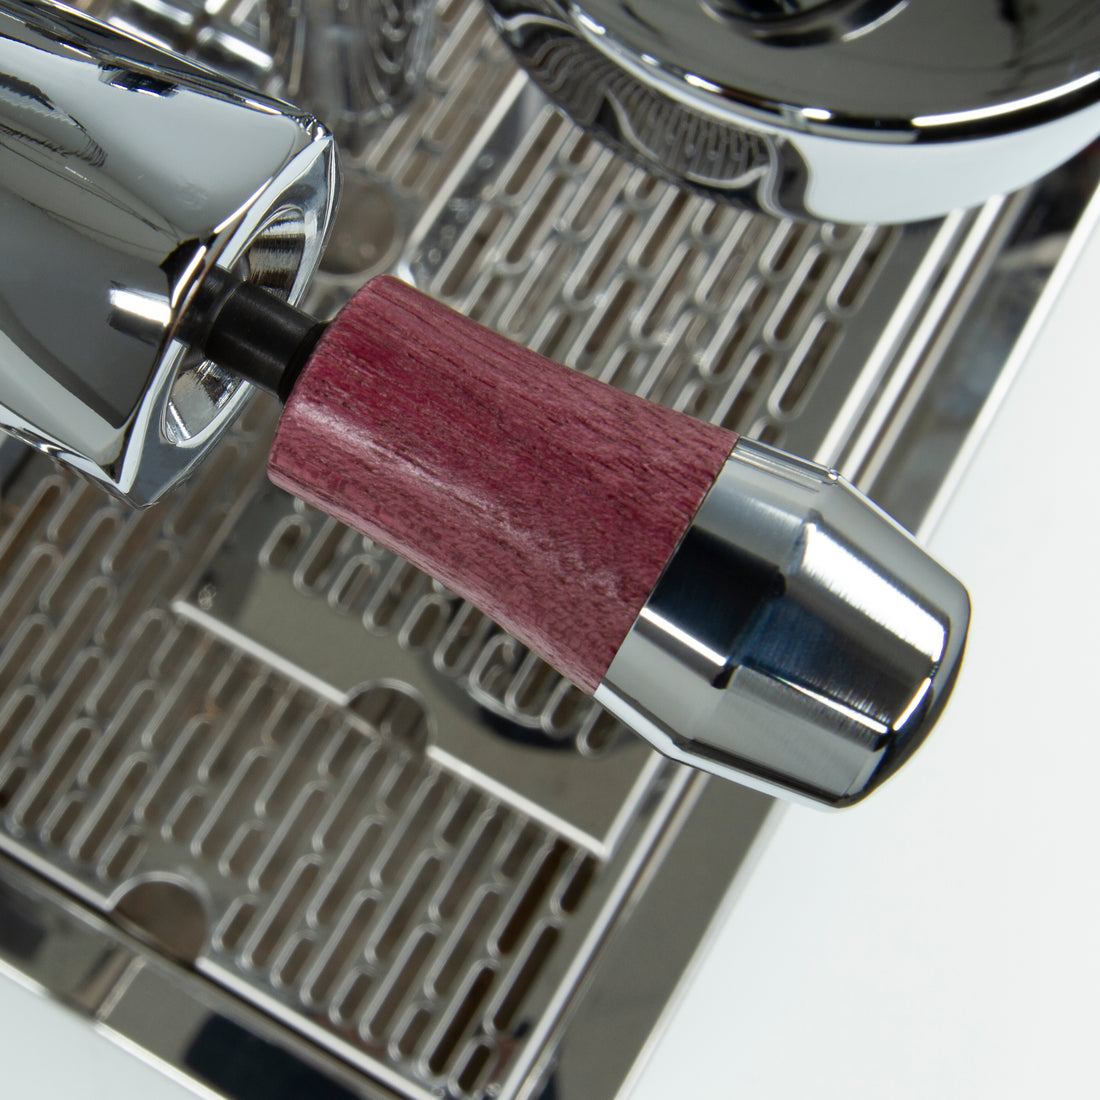 ECM Synchronika Espresso Machine with Purple Heart Accents